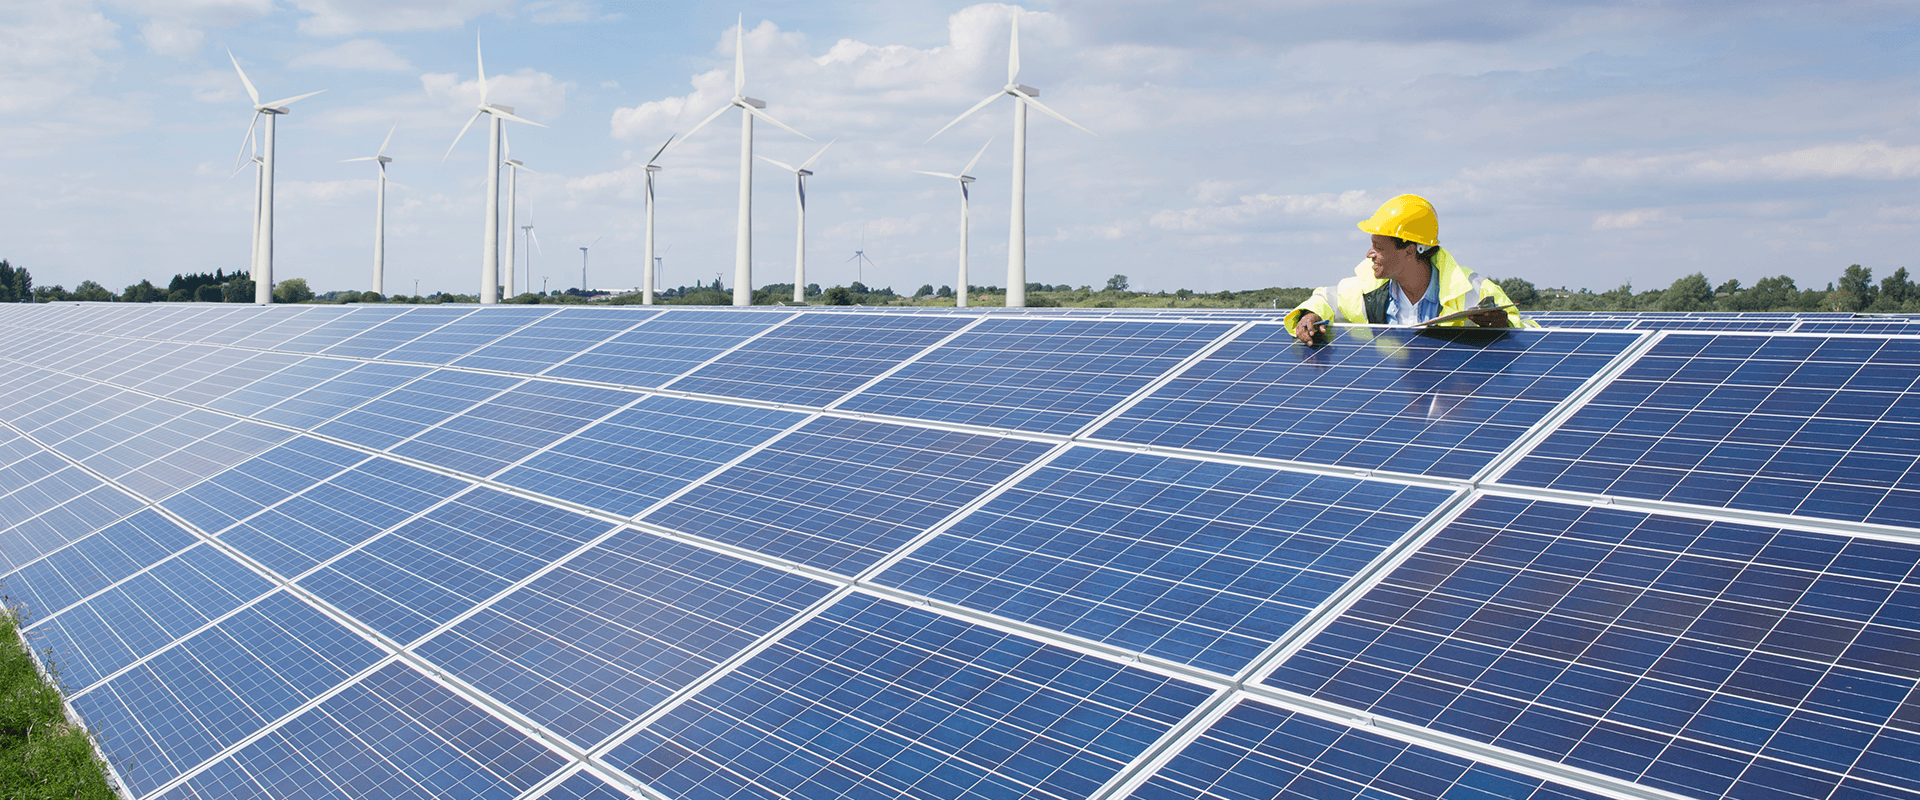 trends in the renewable energy industry